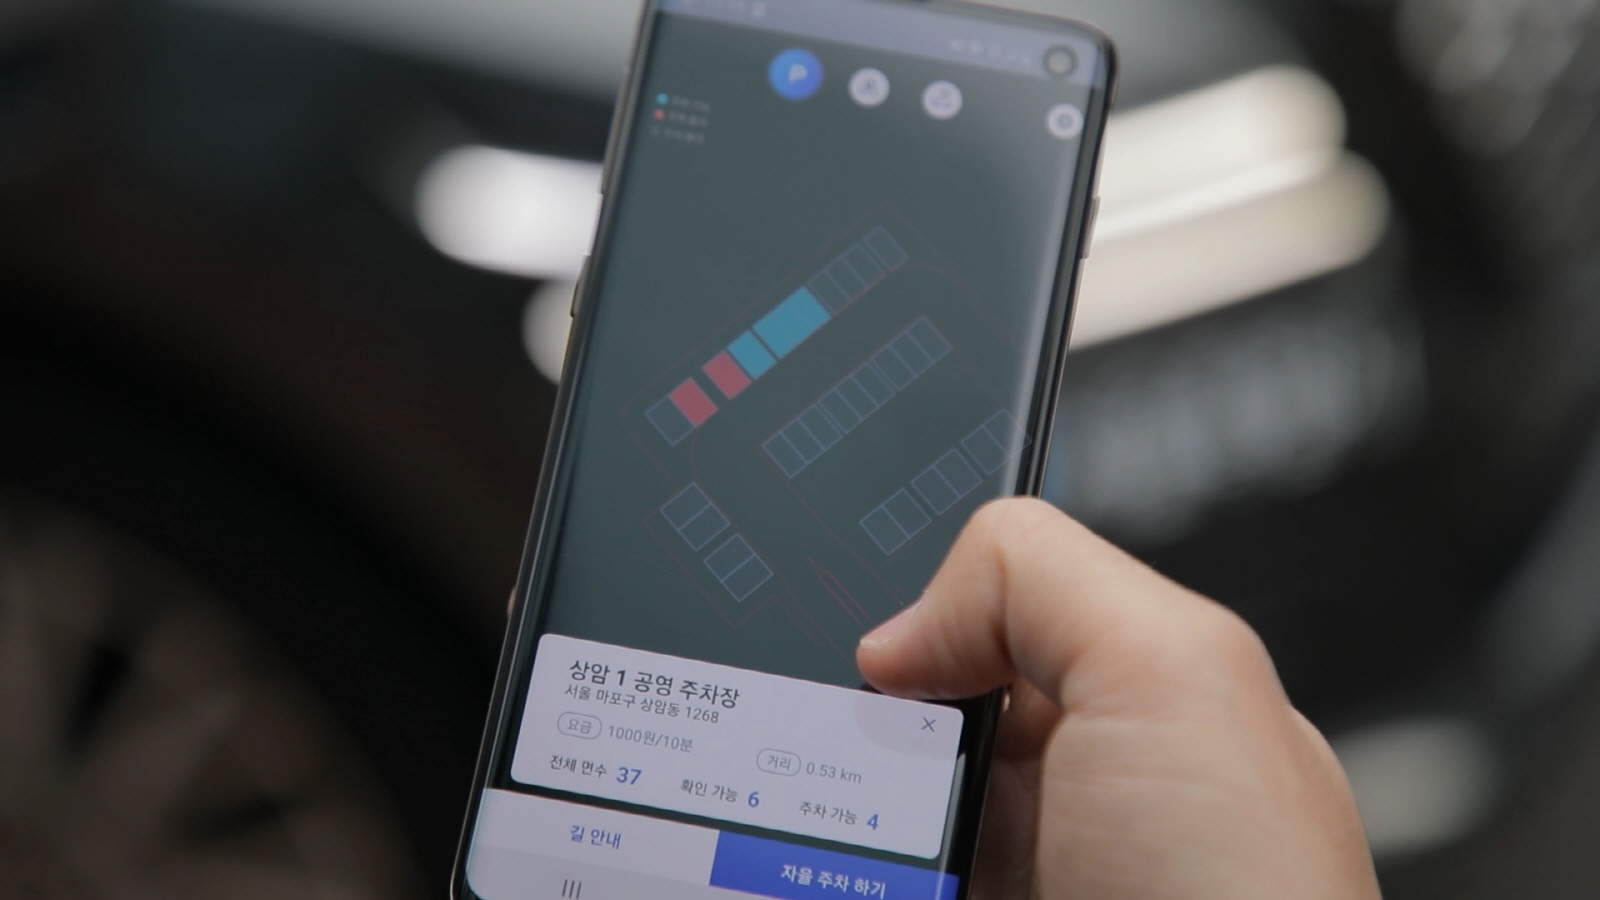 LG유플러스 관계자가 모바일 앱을 통해 주차장 빈 자리를 선택해 5세대(5G) 이동통신 자율주행차 ‘에이원(A1)’가 스스로 주차할 수 있도록 하는 모습. LG유플러스 제공